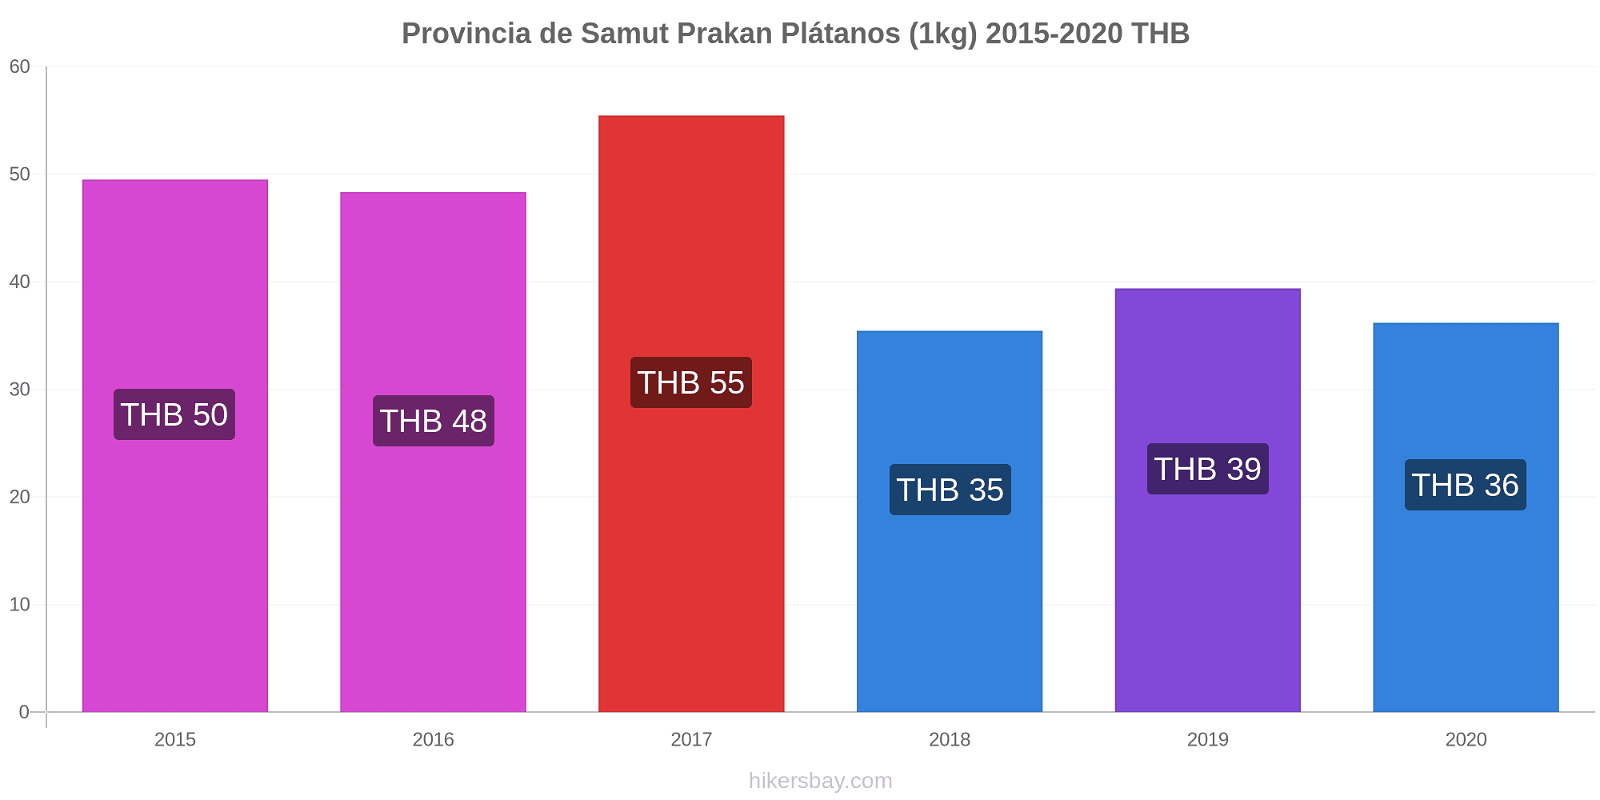 Provincia de Samut Prakan cambios de precios Plátano (1kg) hikersbay.com